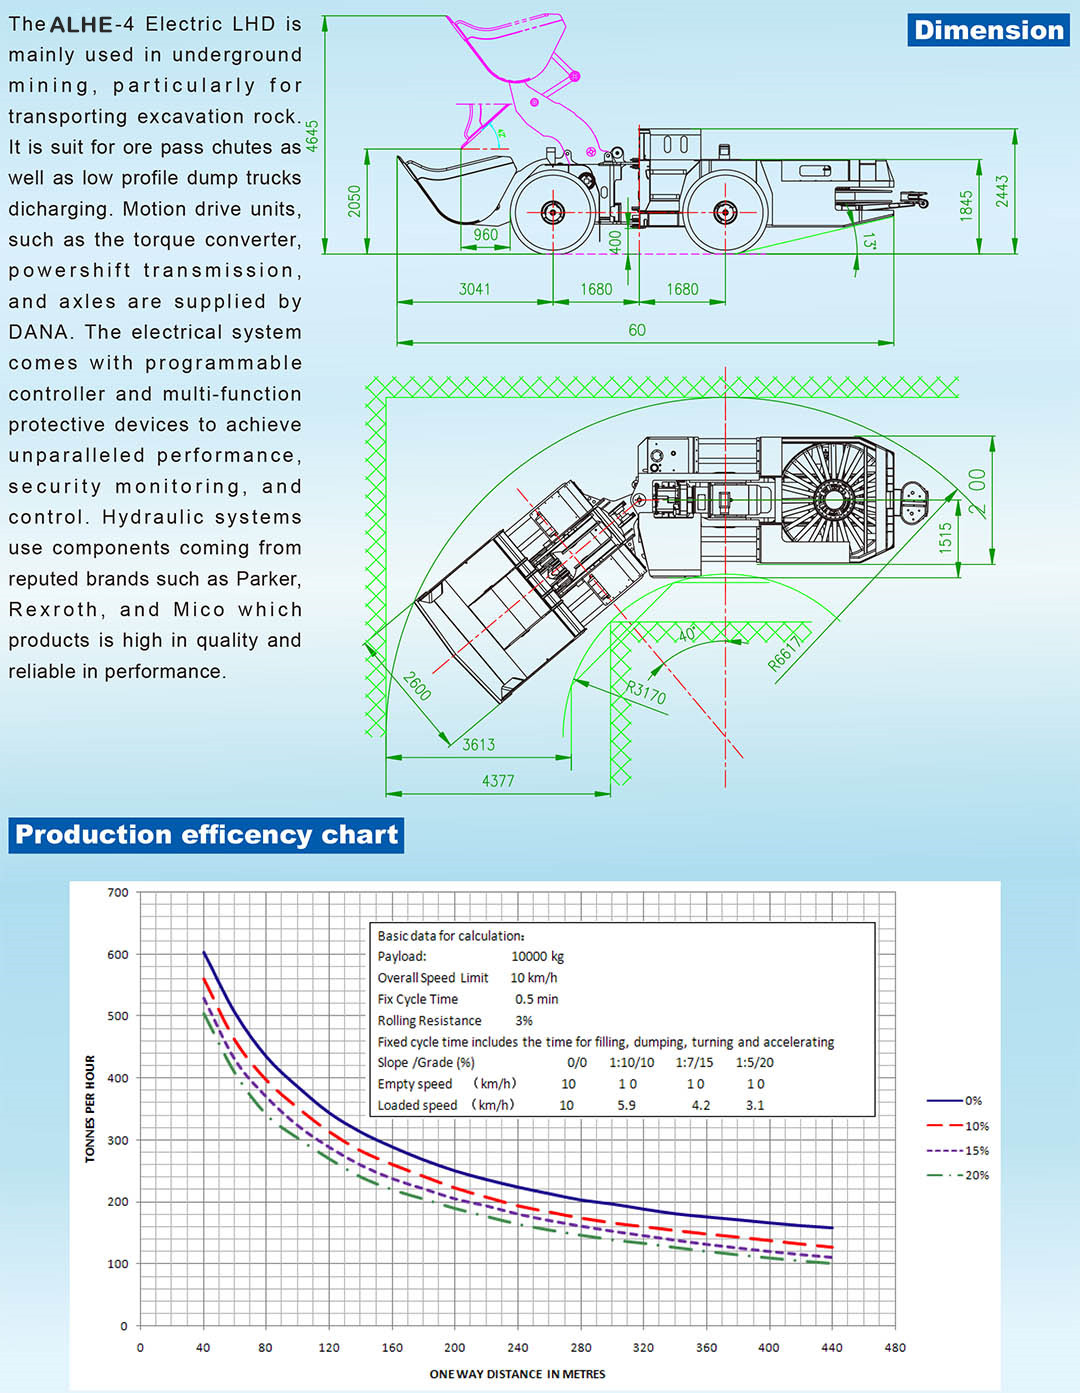 (5)ALHD-4 Electric LHD-Beijing Hot Mininf Tech Co., Ltd